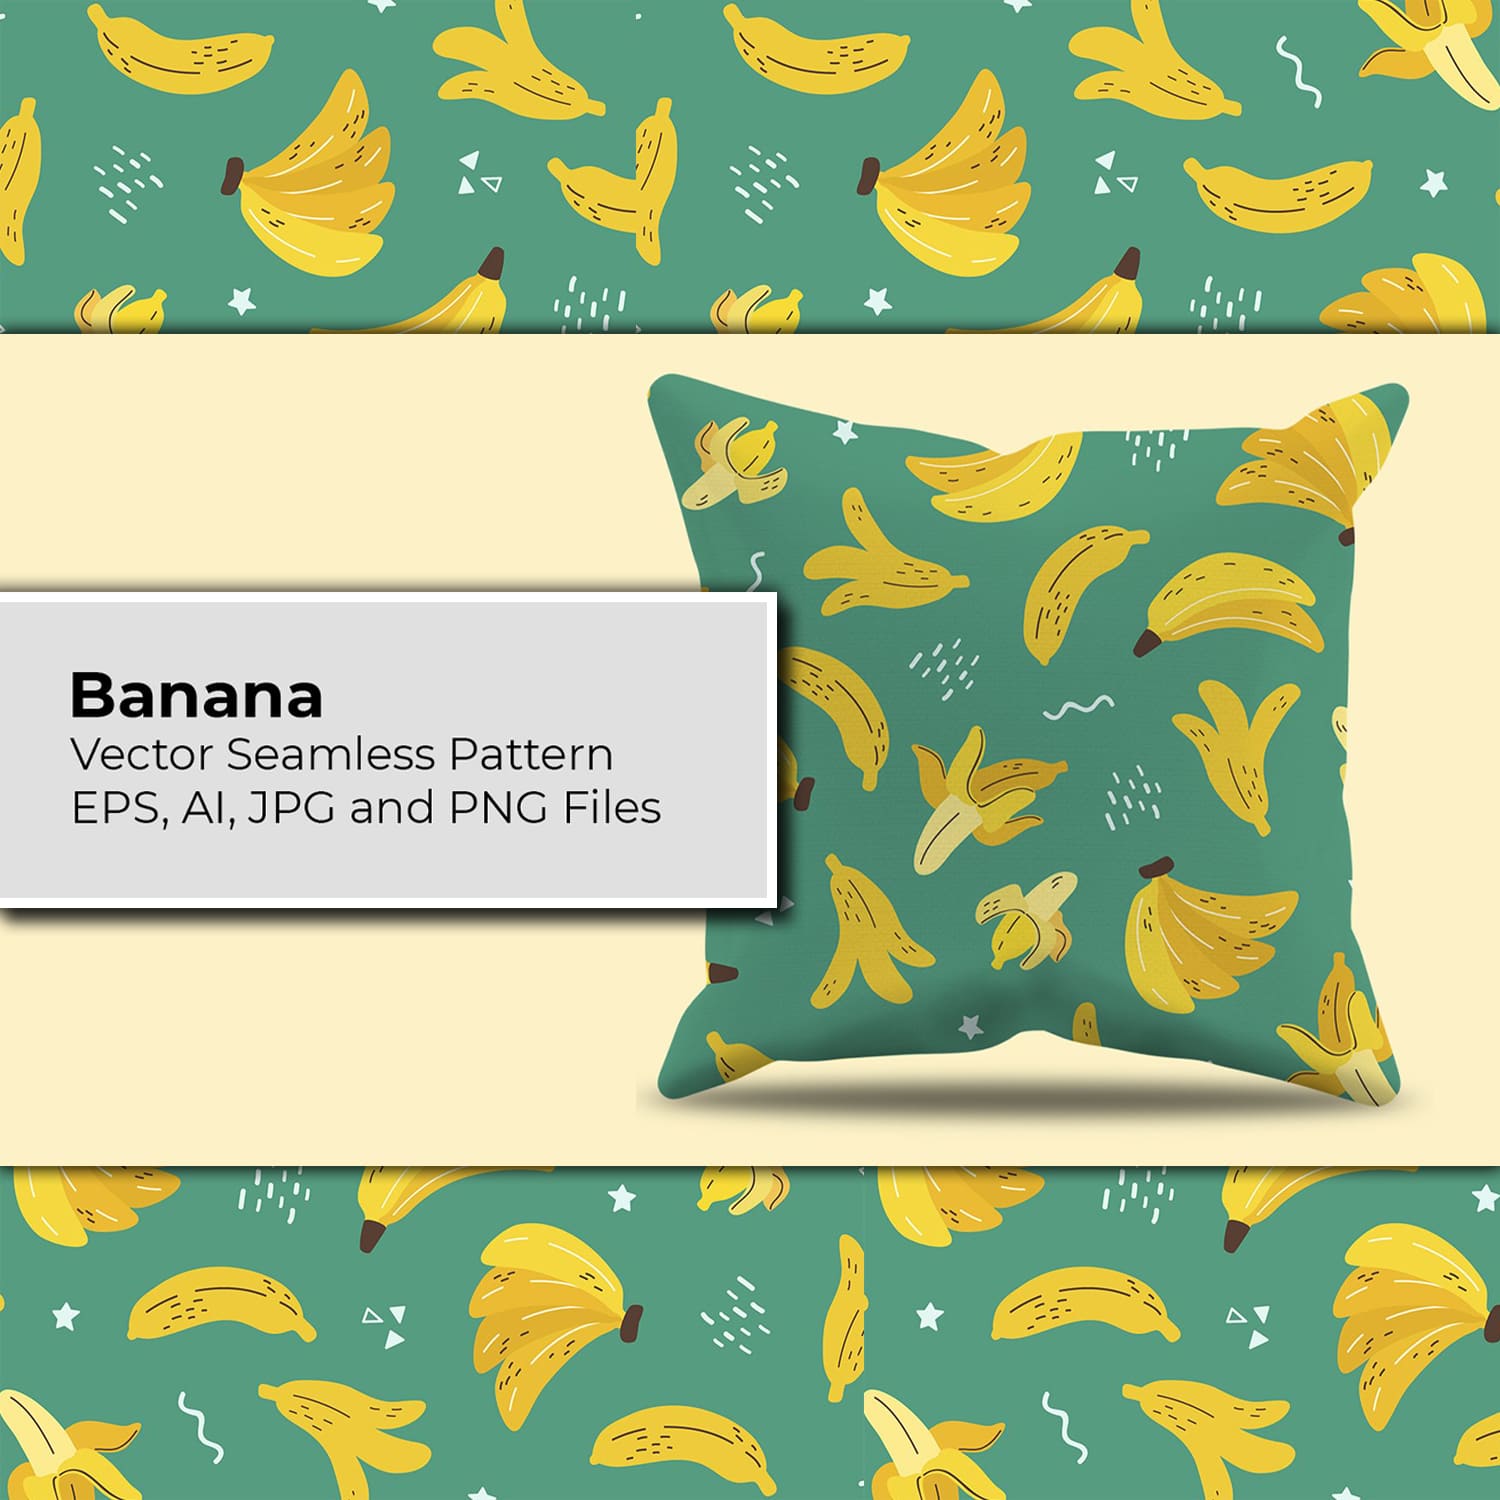 Banana | Seamless Pattern cover.